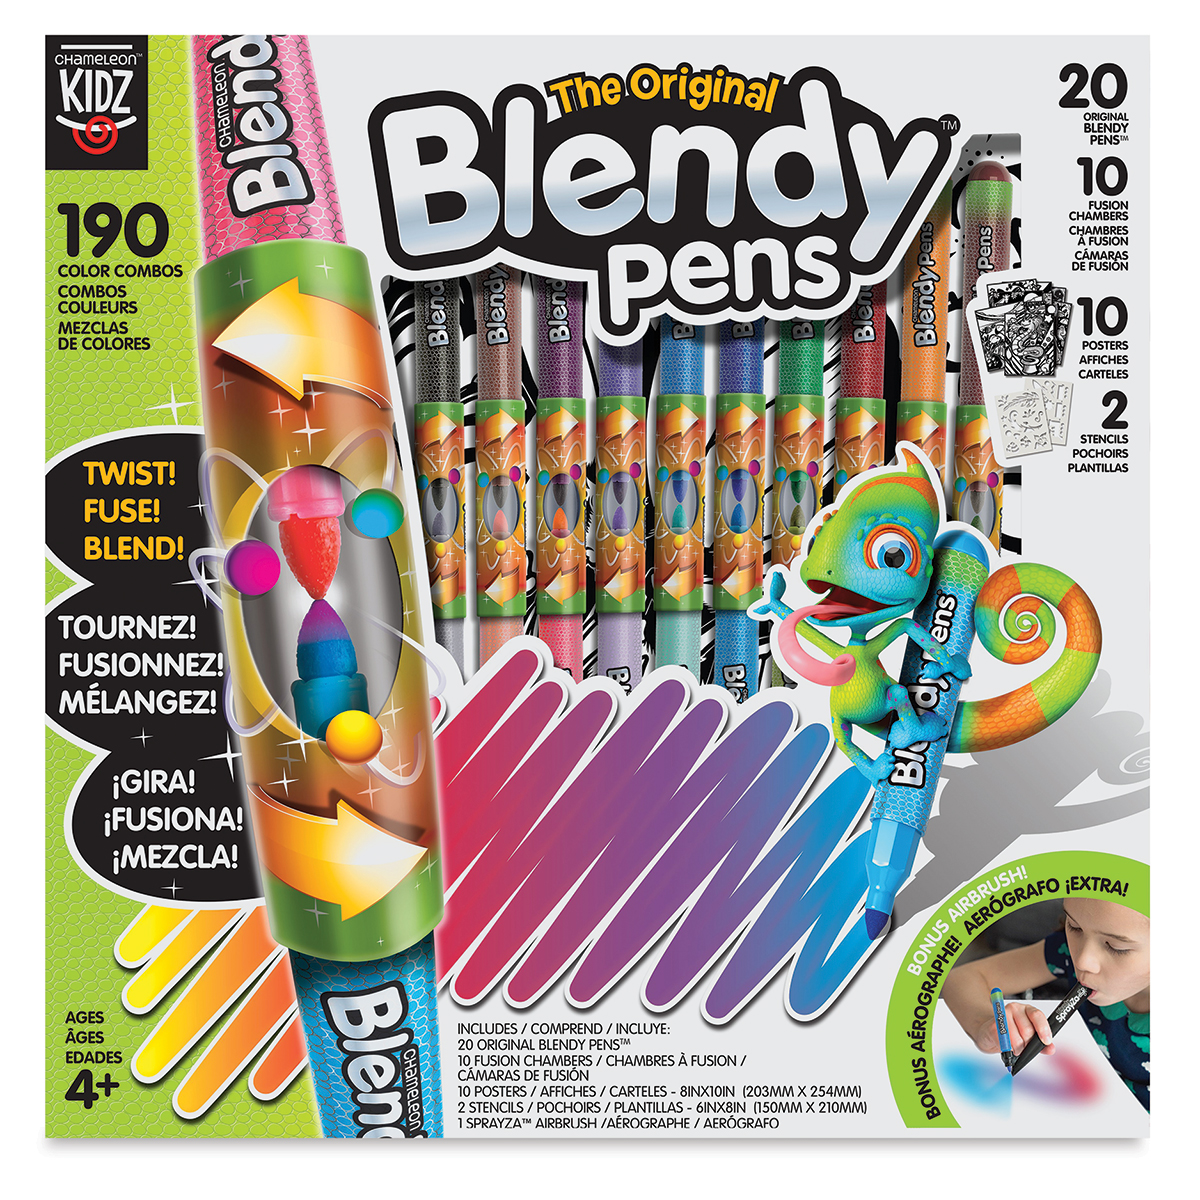 Chameleon Kidz - The Original Blendy Pens Jumbo Kit (Makes 276 Color  Combos!) 